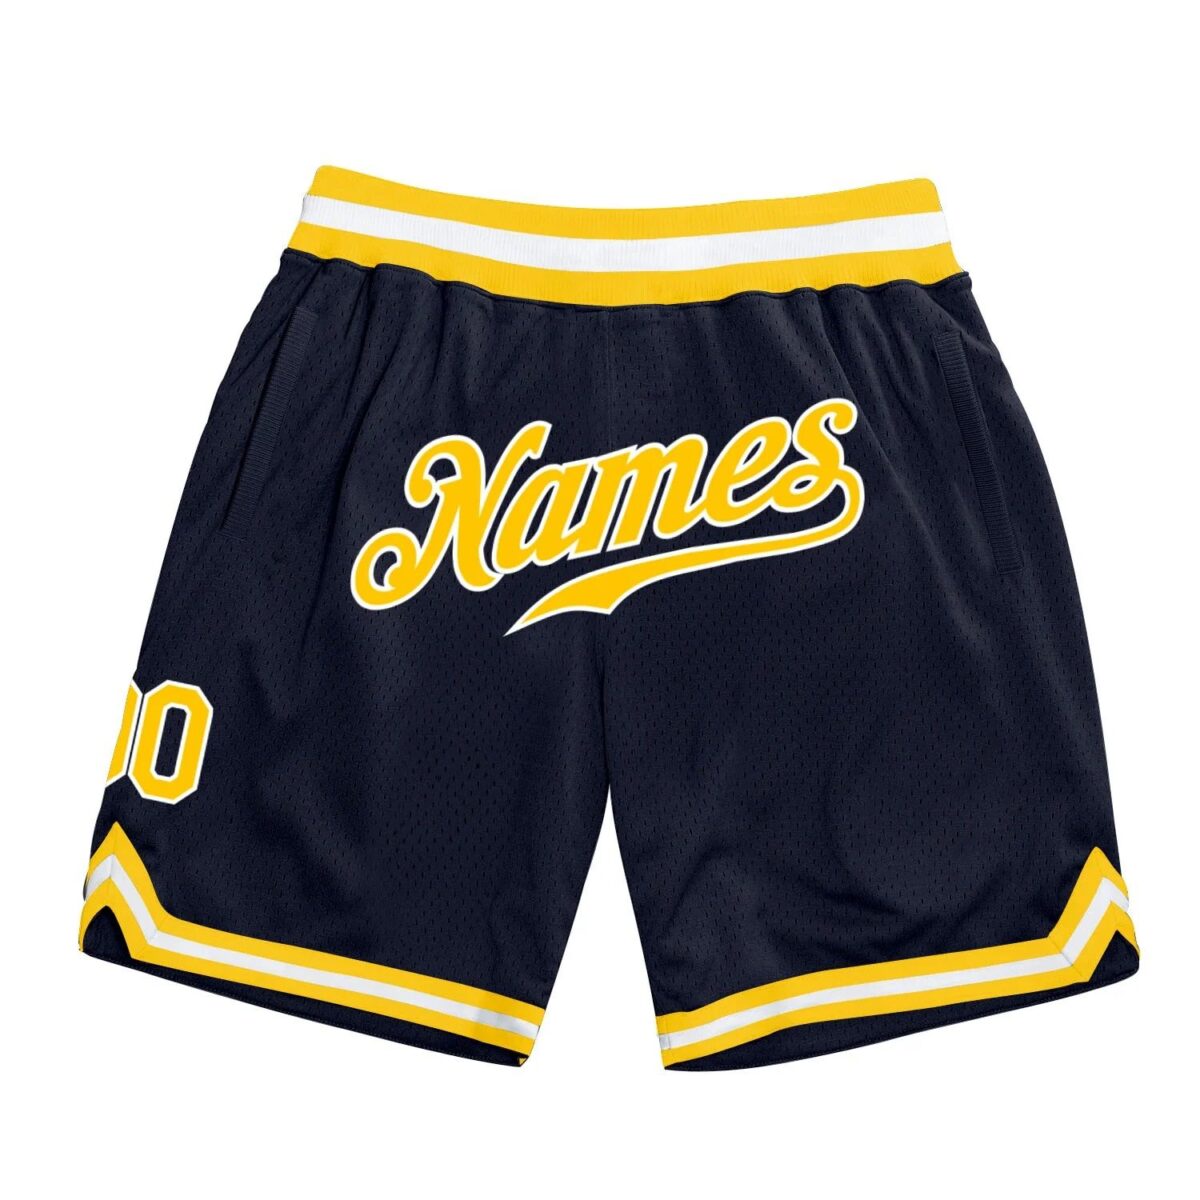 Navy & Yellow Basketball Shorts 1